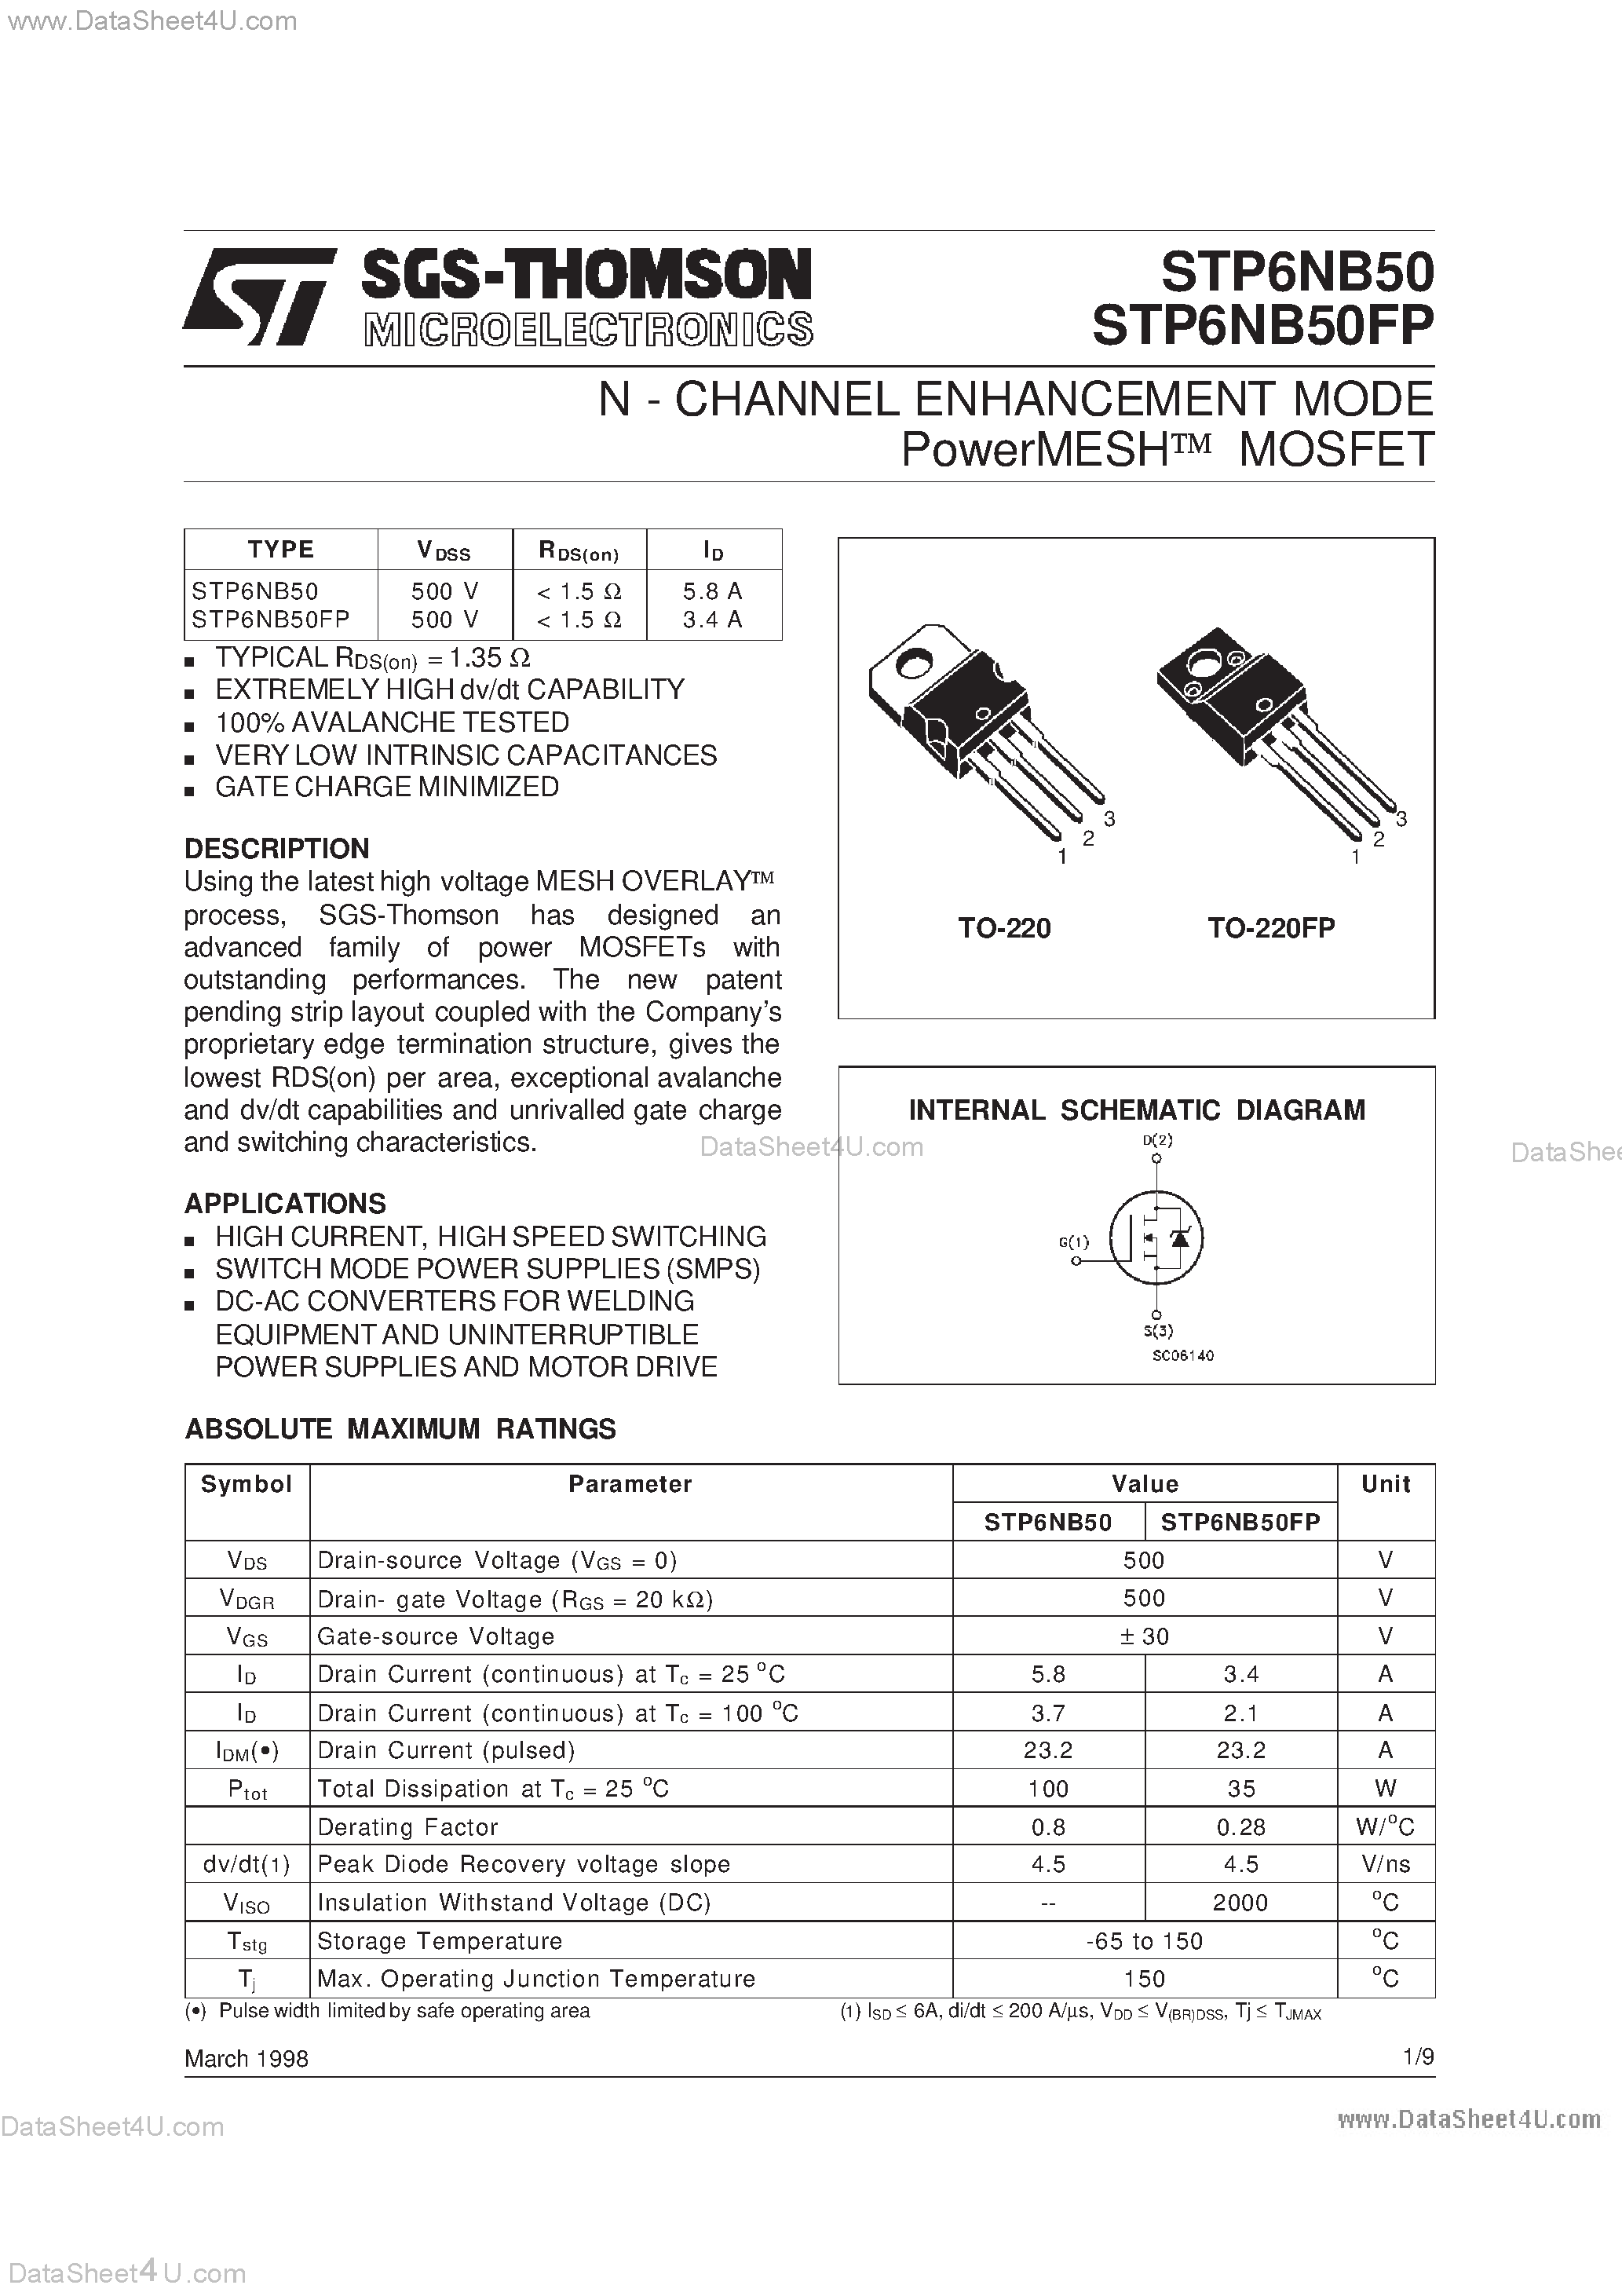 Datasheet STP6NB50 - N - CHANNEL ENHANCEMENT MODE PowerMESH MOSFET page 1